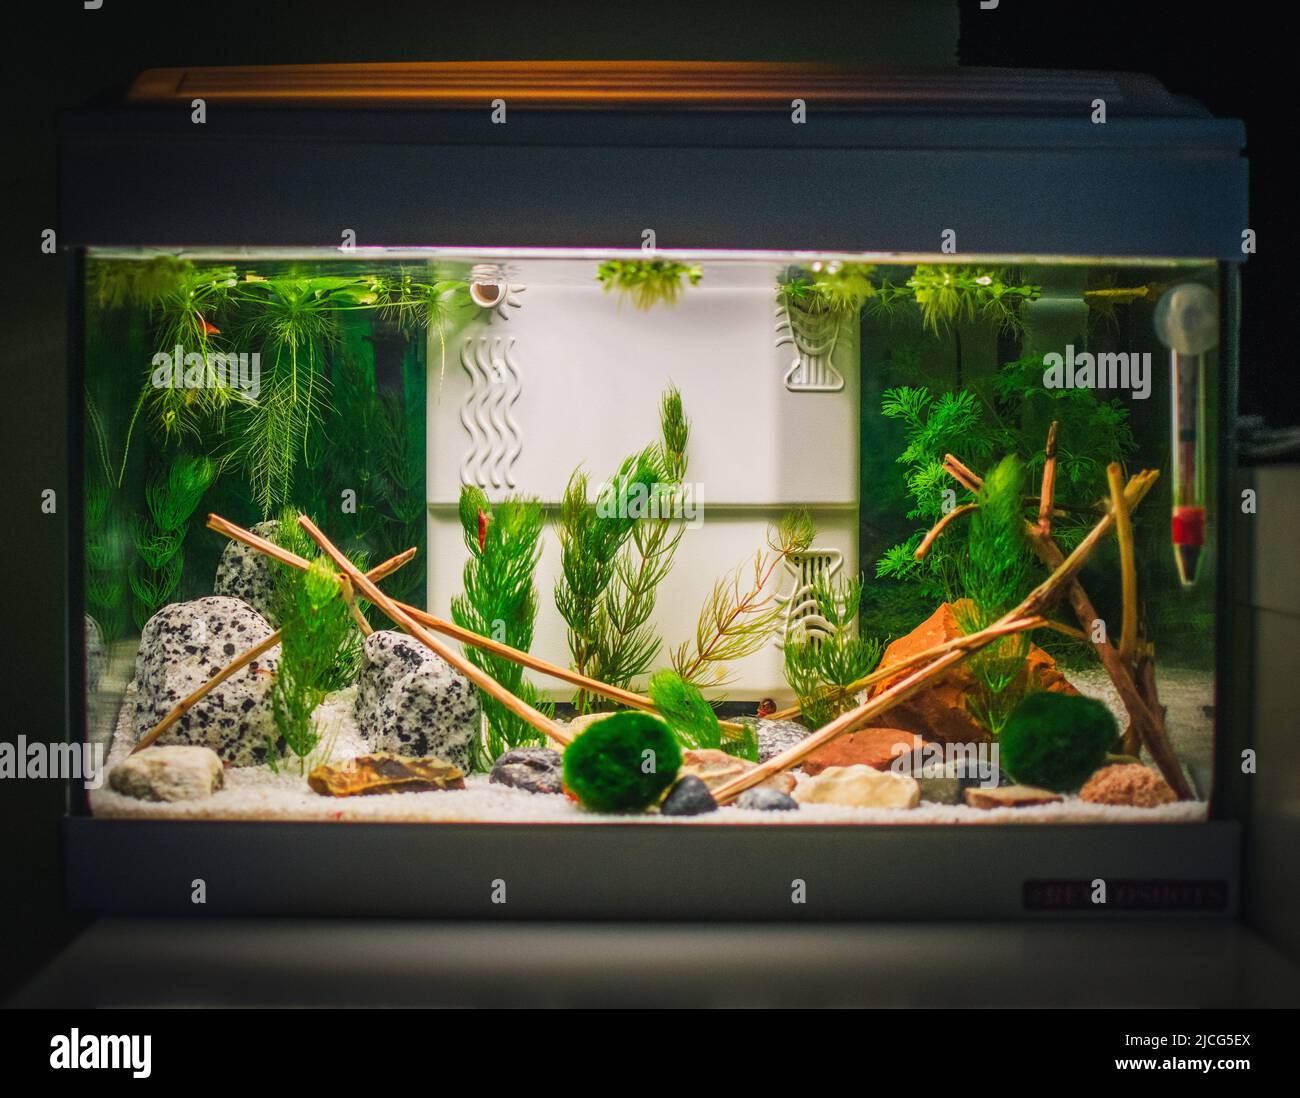 a great jungle planted aquarium Stock Photo